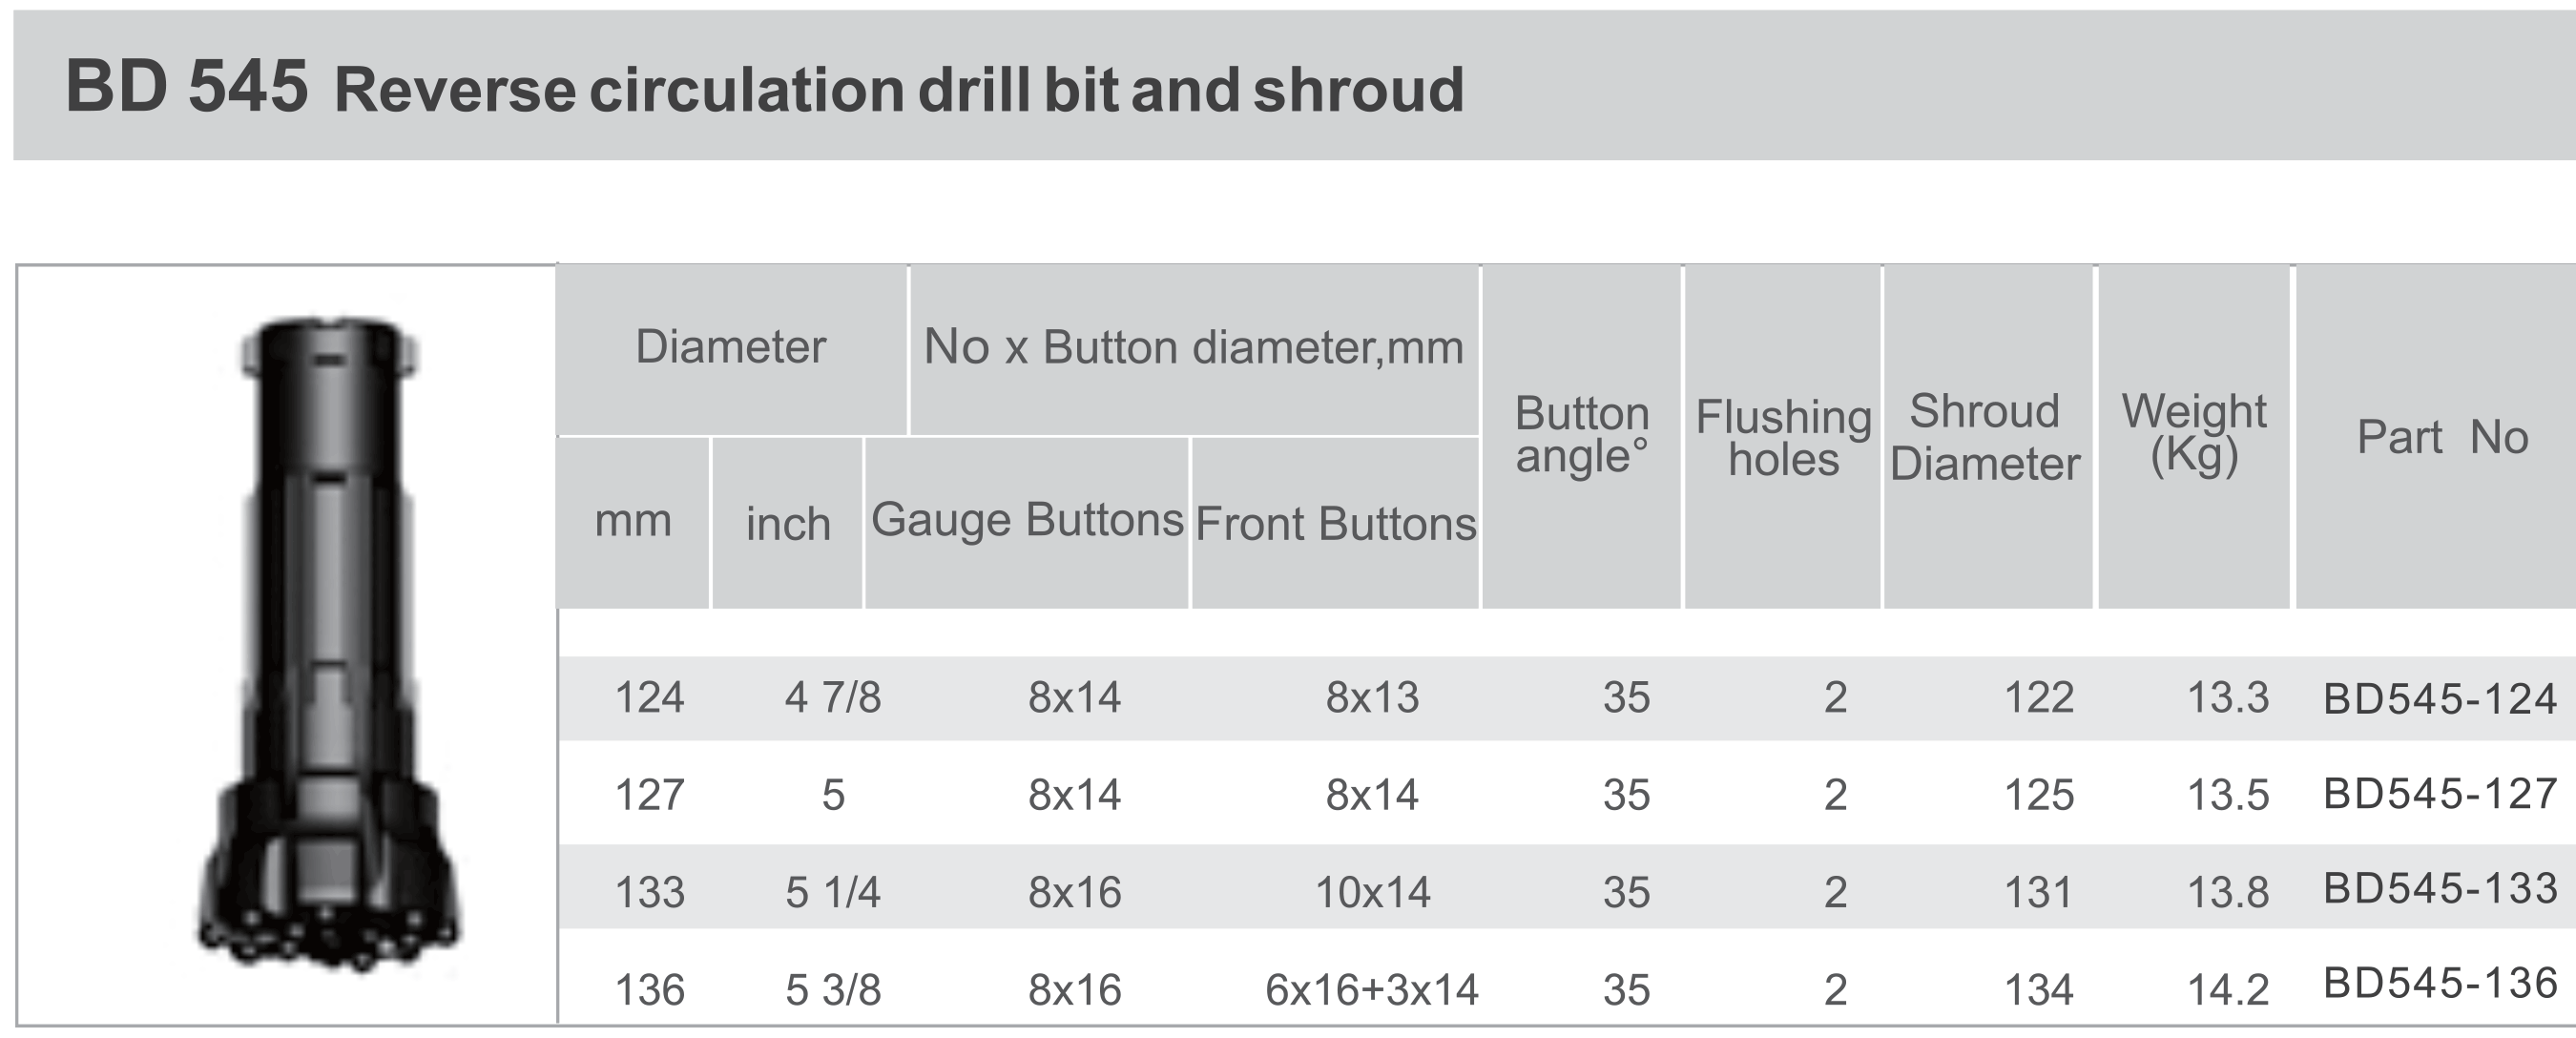 Black Diamond Drilling BD545 RC Reverse Circulation Drill Bit Shroud technical data